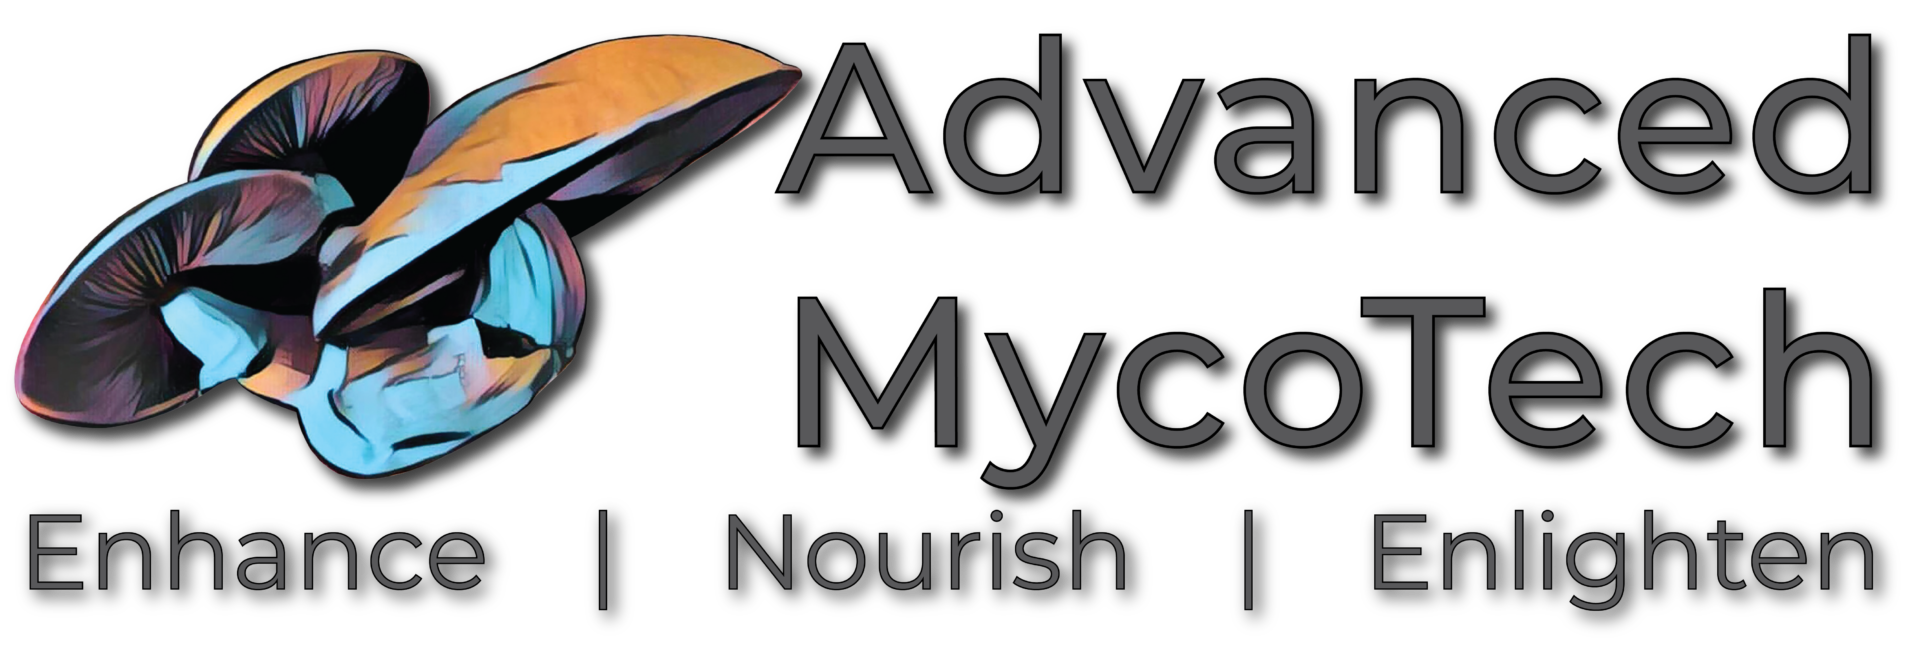 Advanced MycoTech